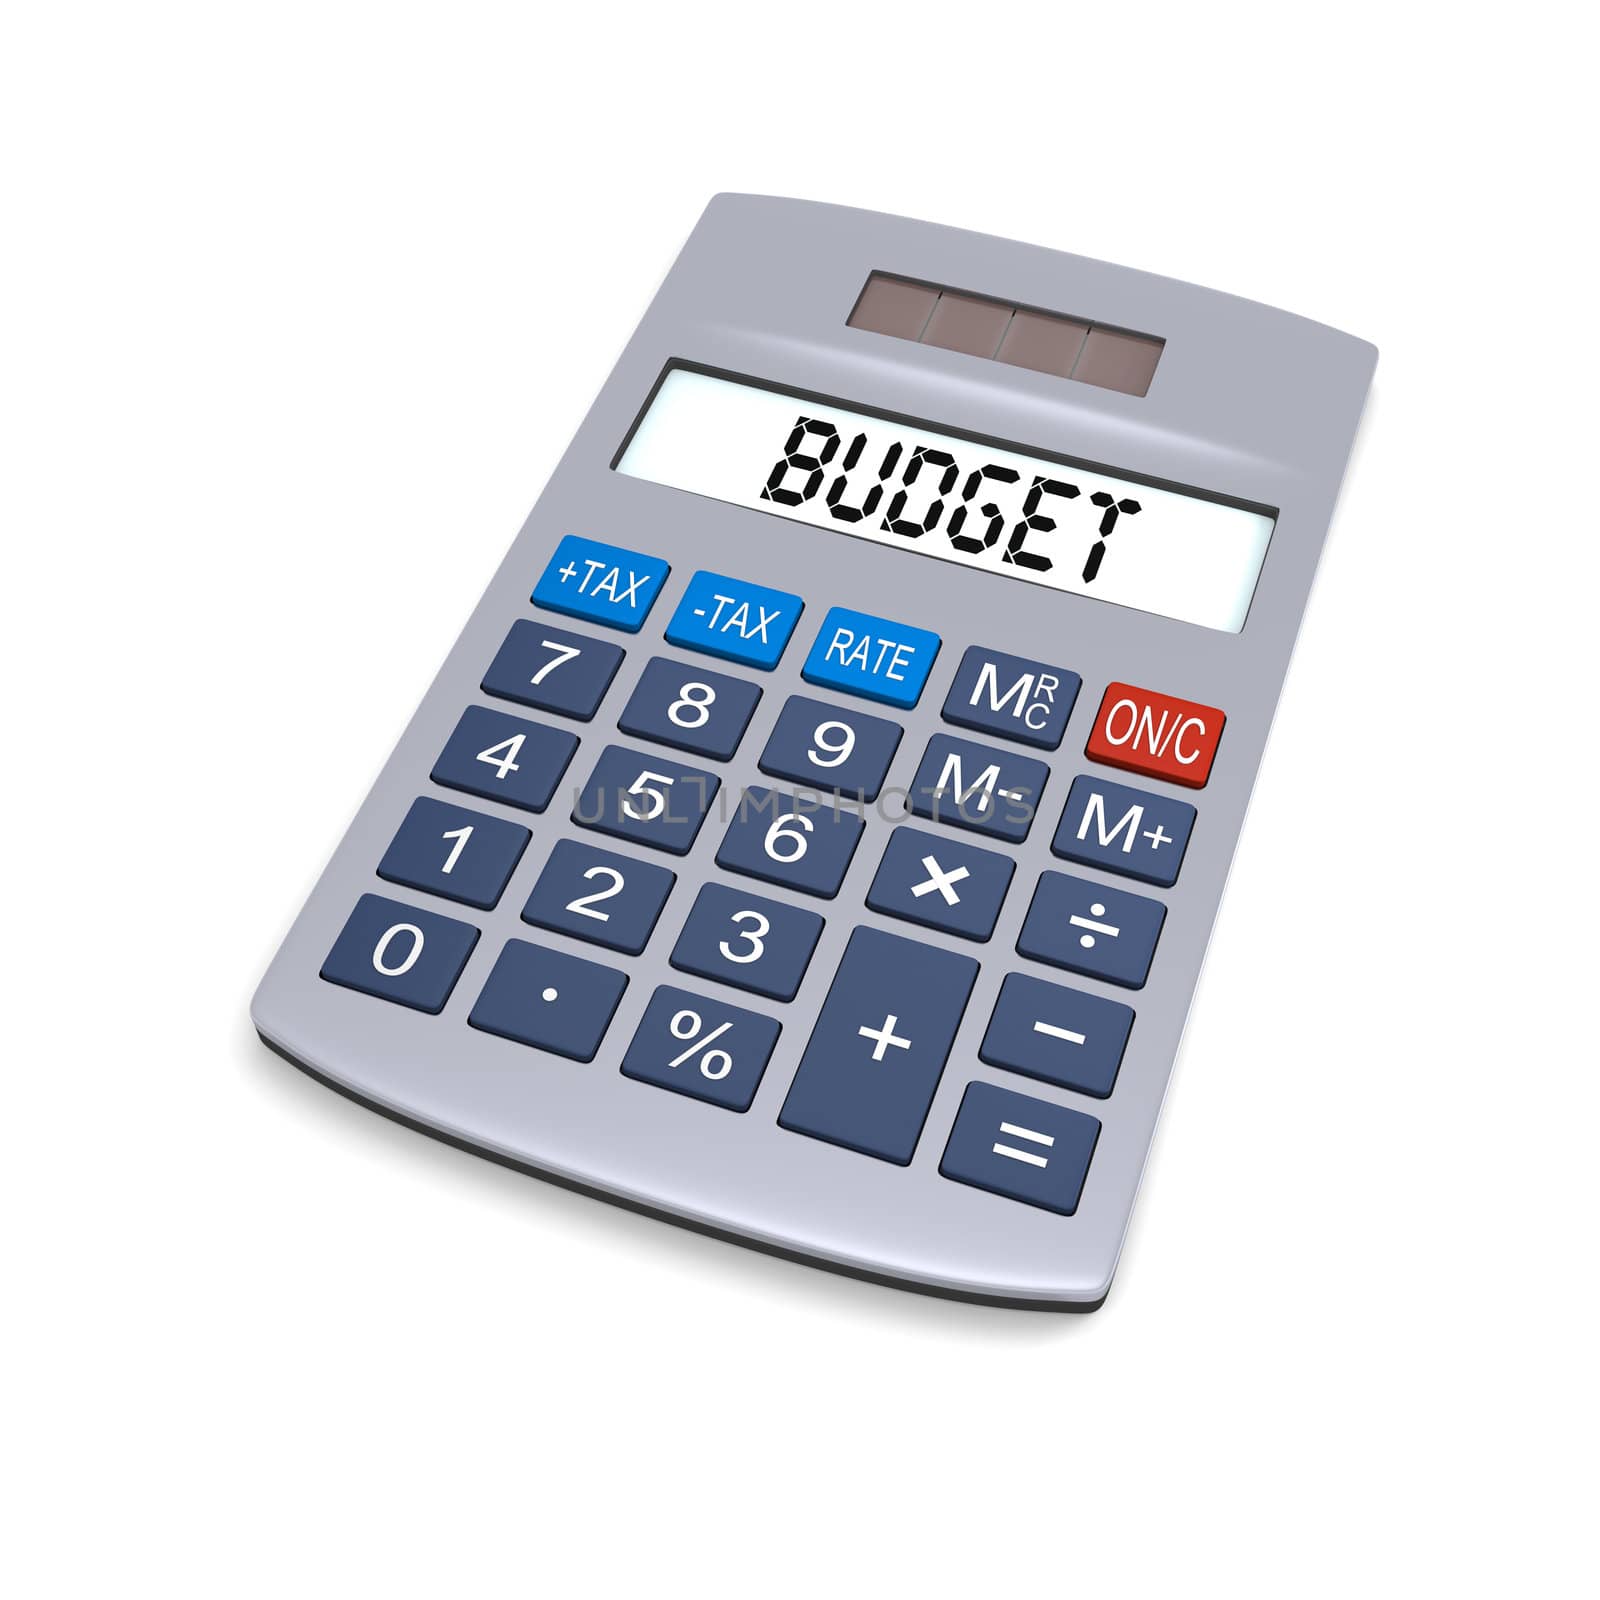 Budget calculator by Harvepino